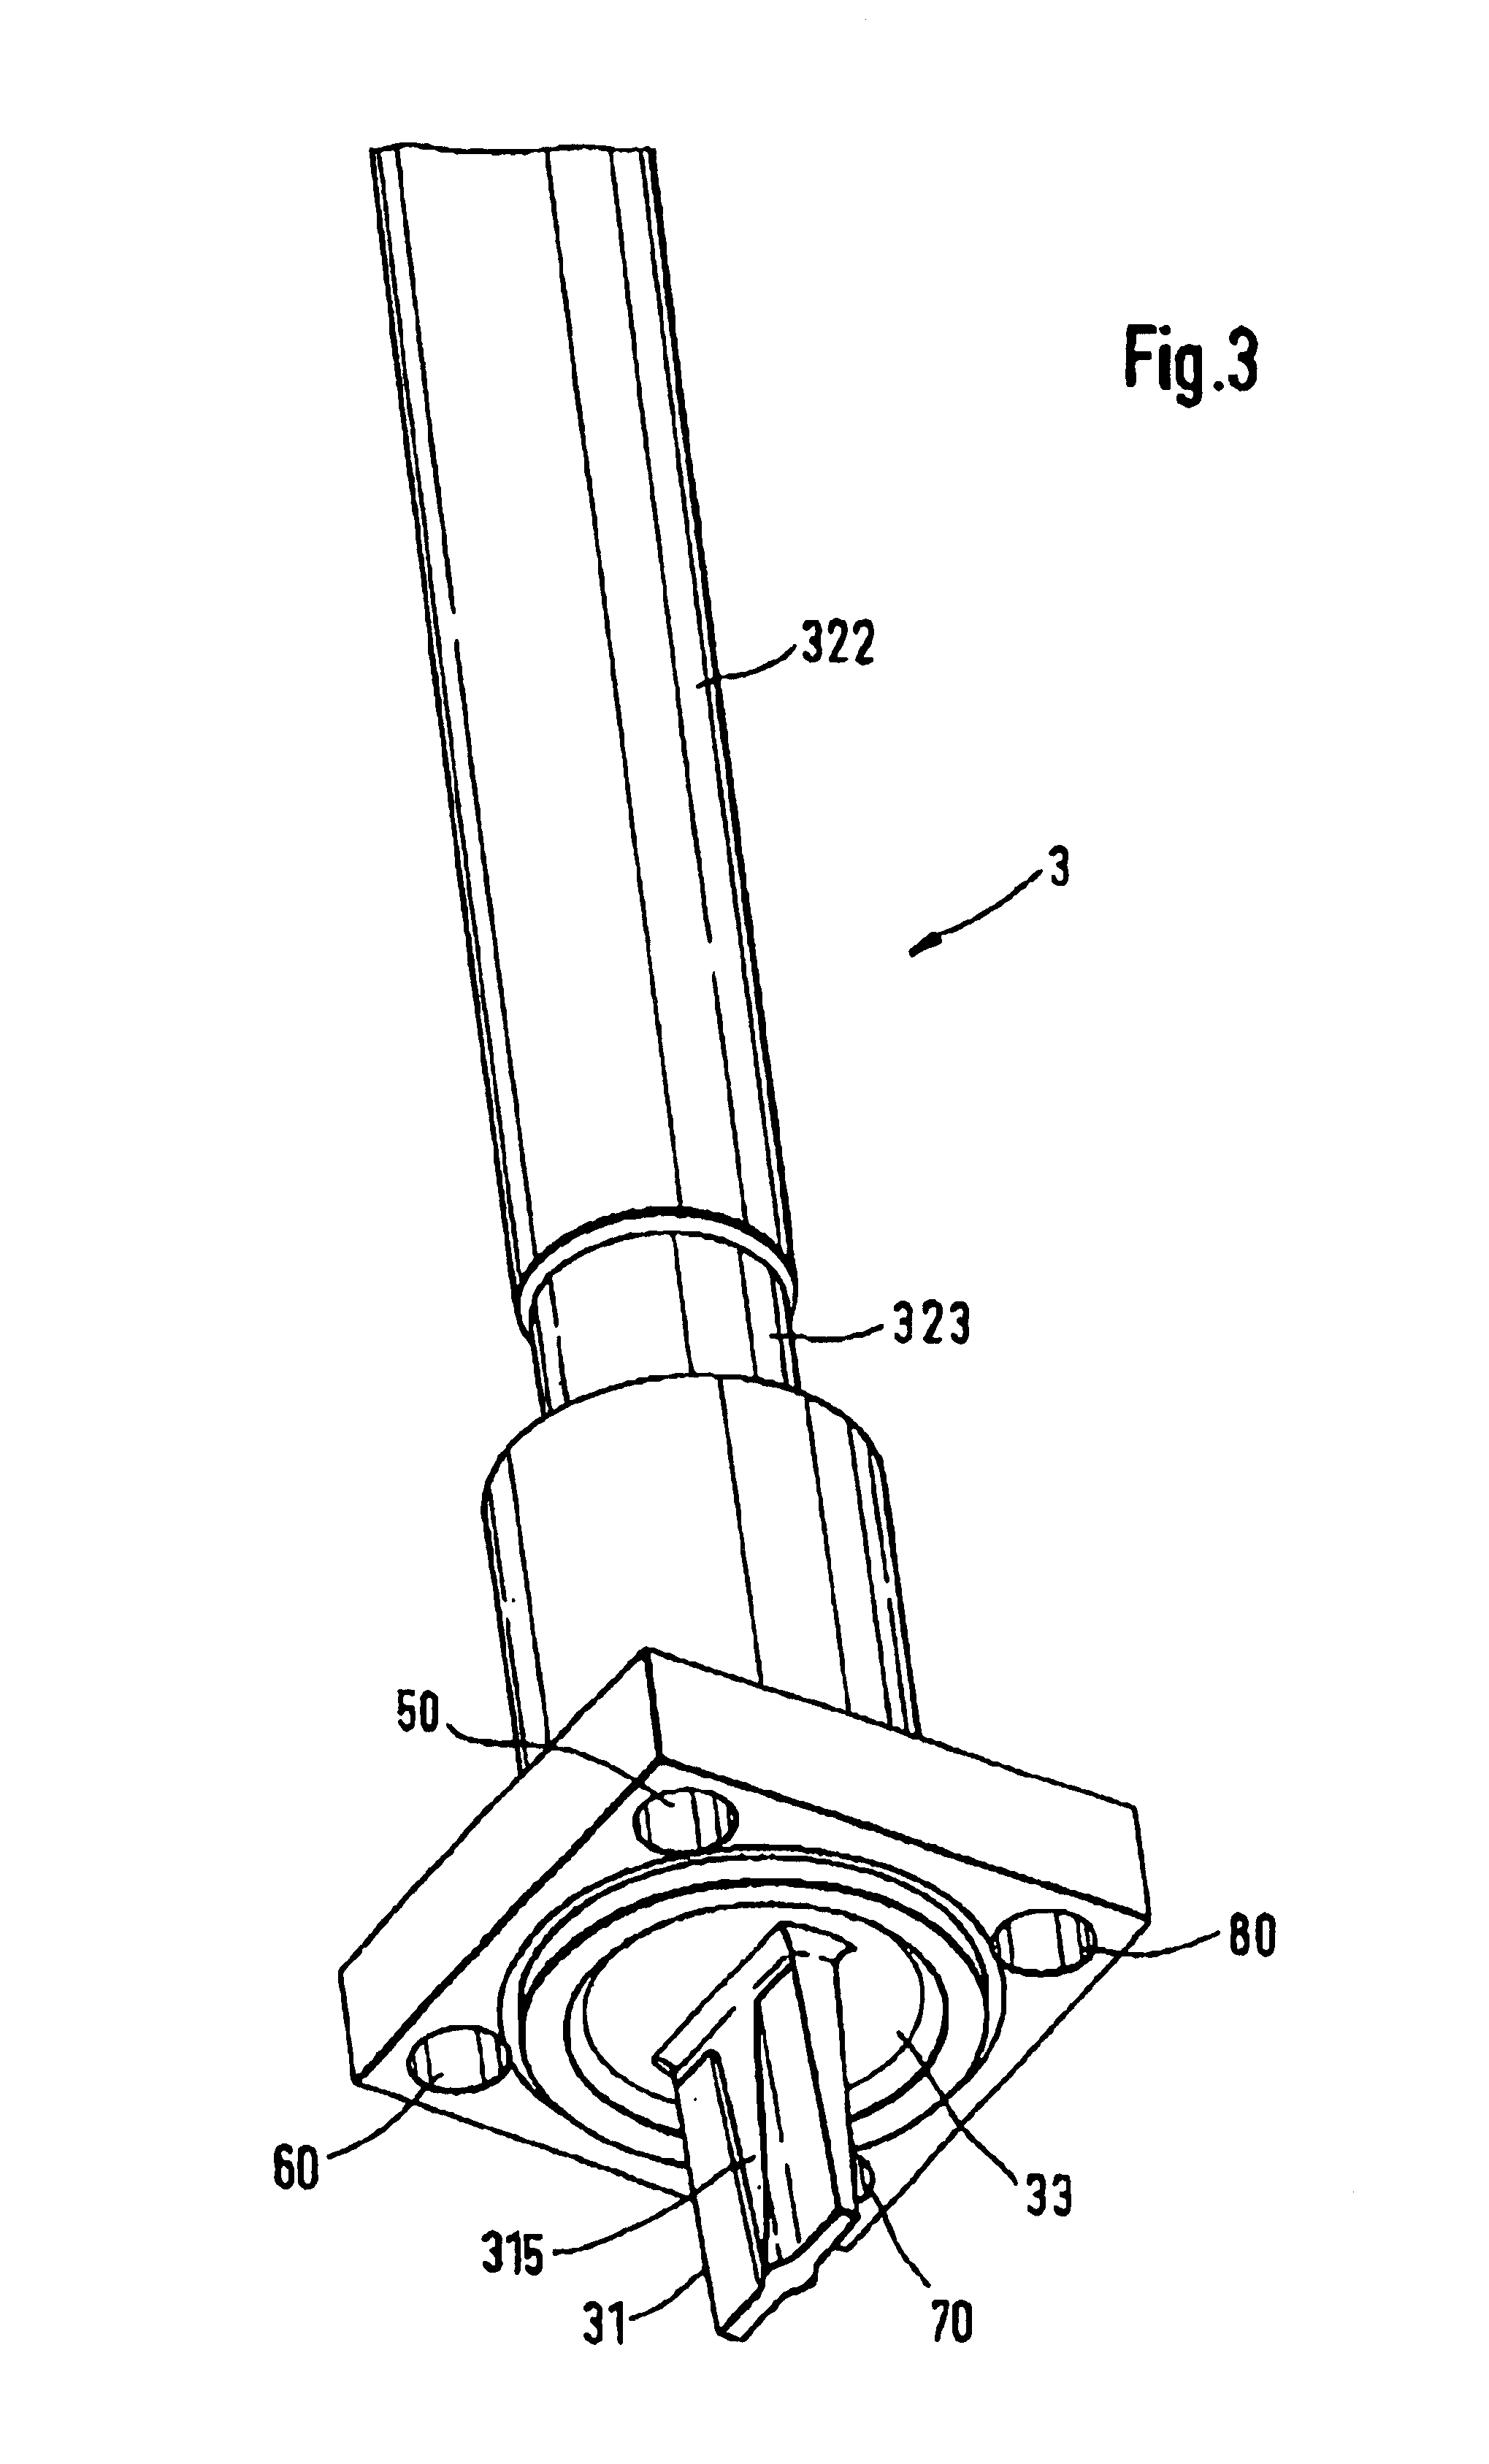 Vortex flow sensor for measuring fluid flow through a flow tube